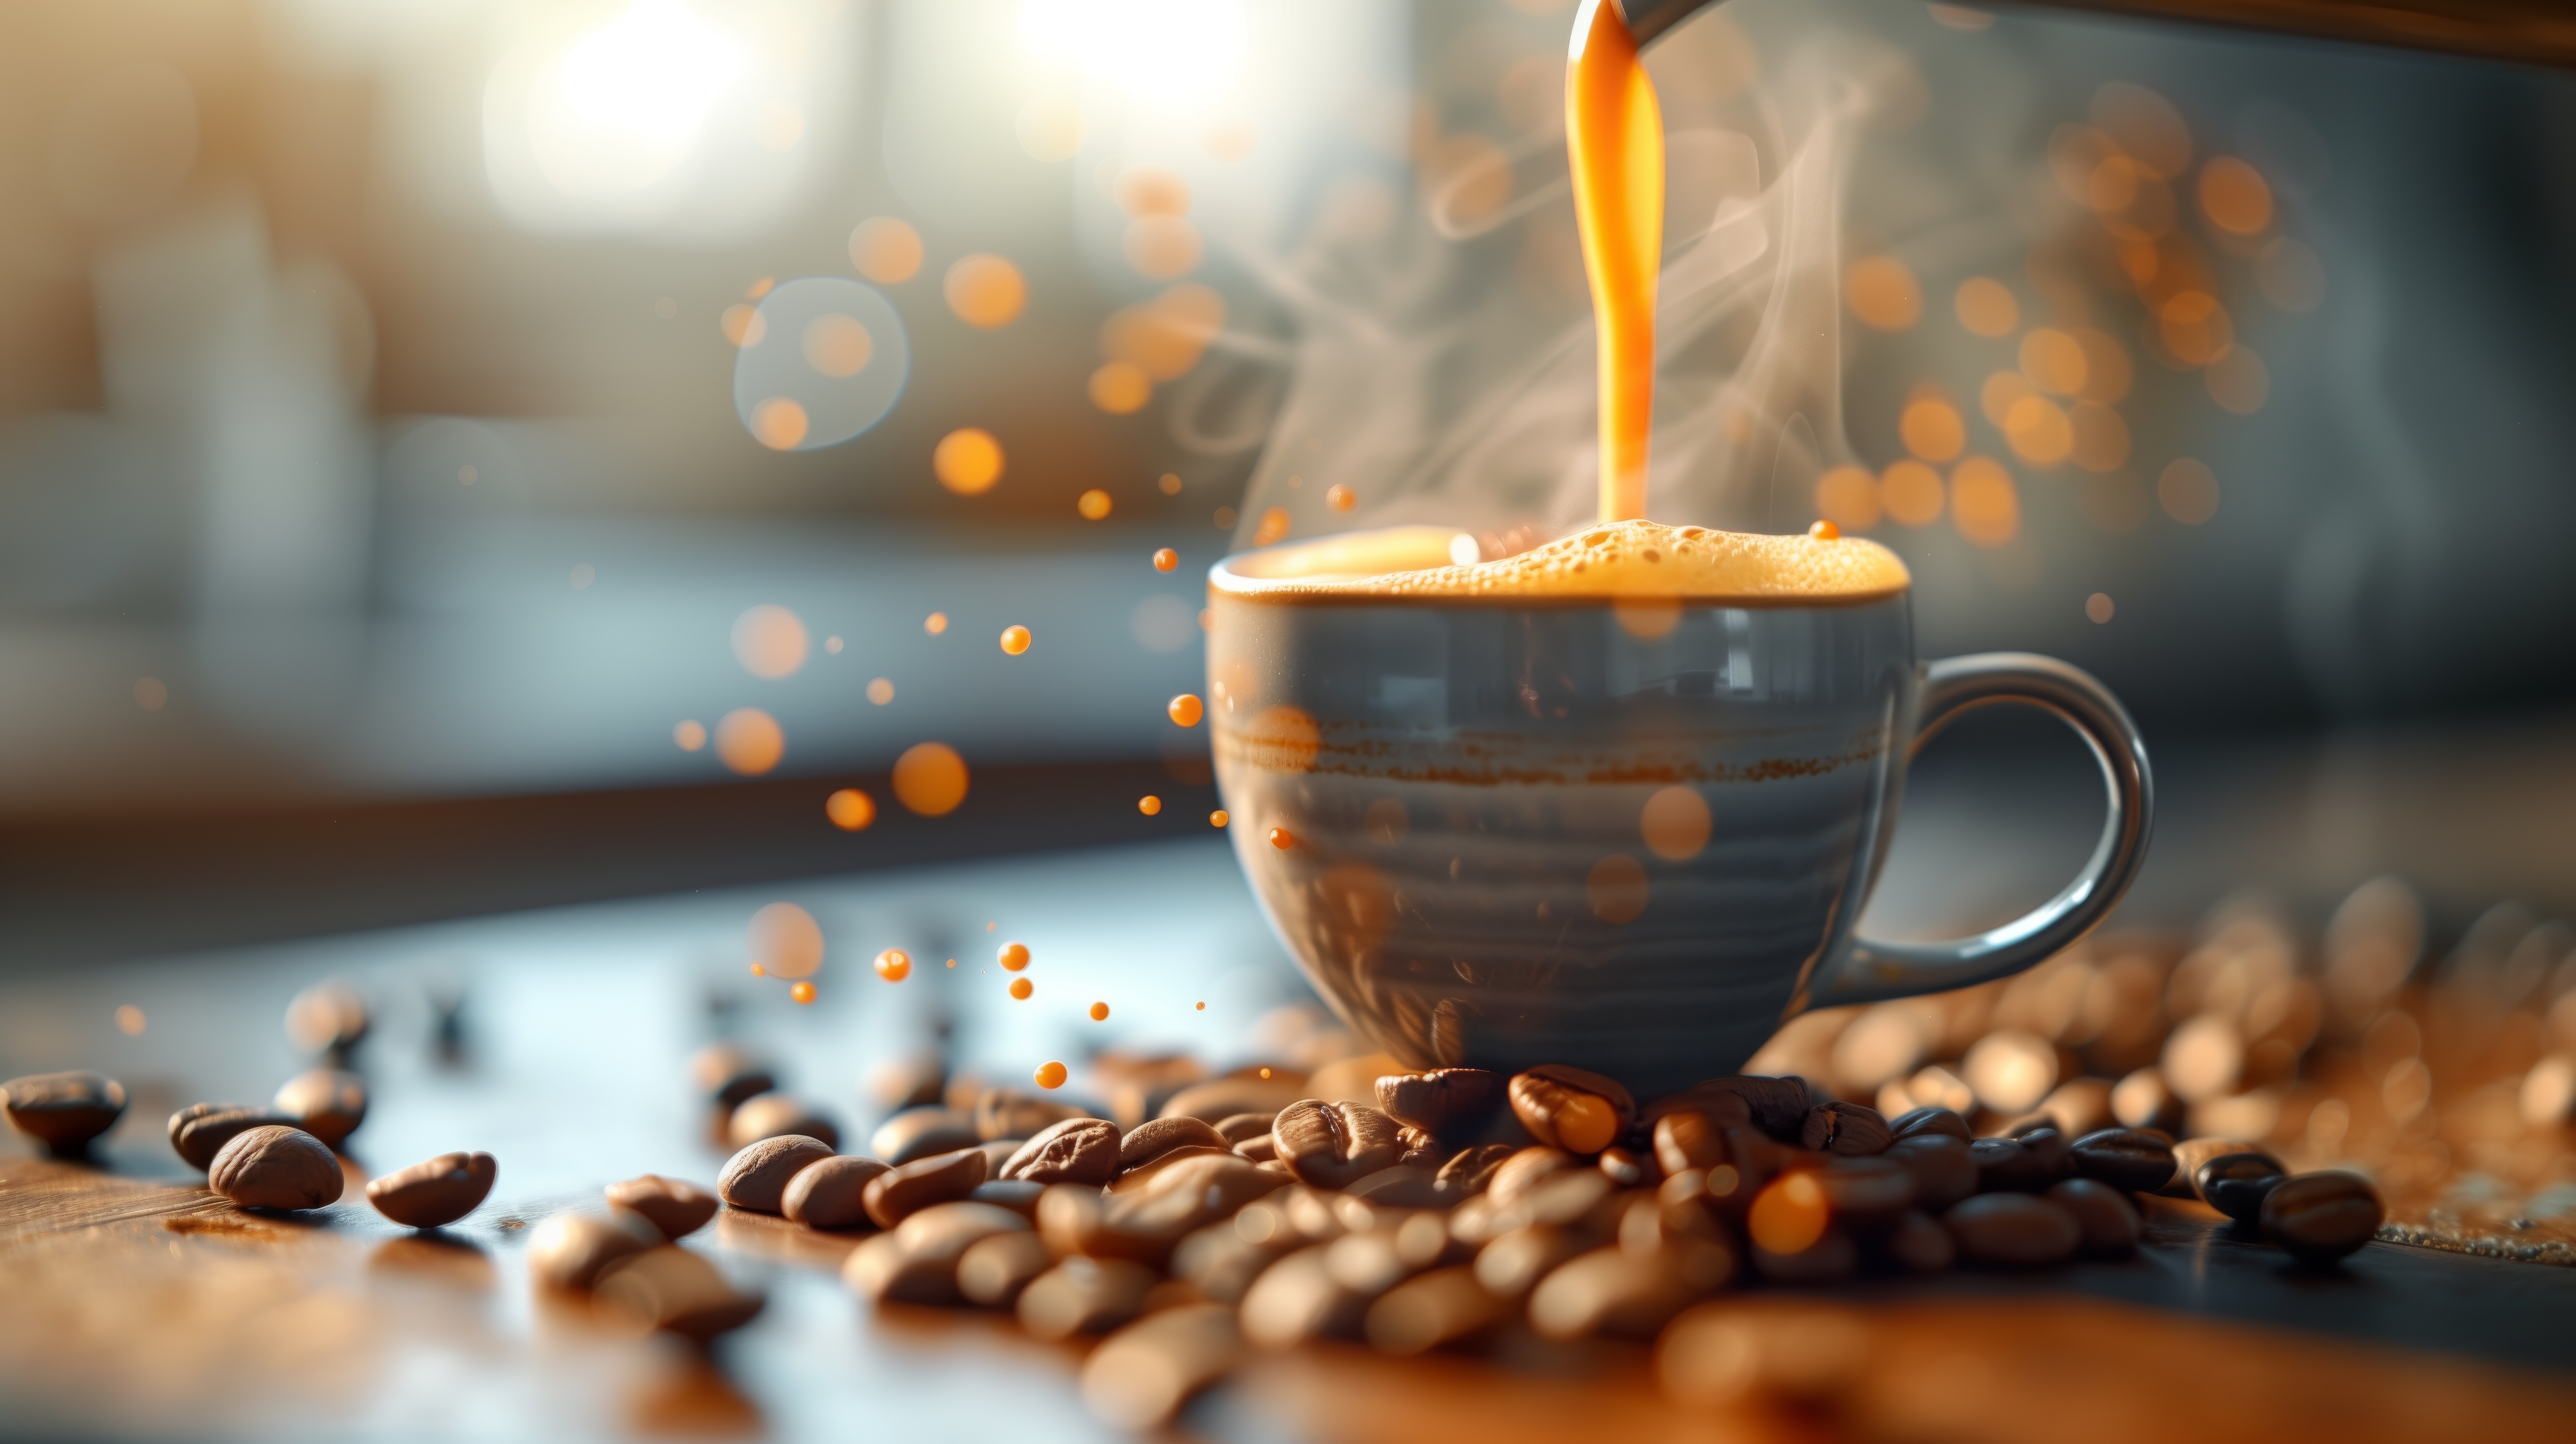 General 5824x3264 AI art coffee beans coffee cup coffee steam (heat) espresso depth of field bokeh